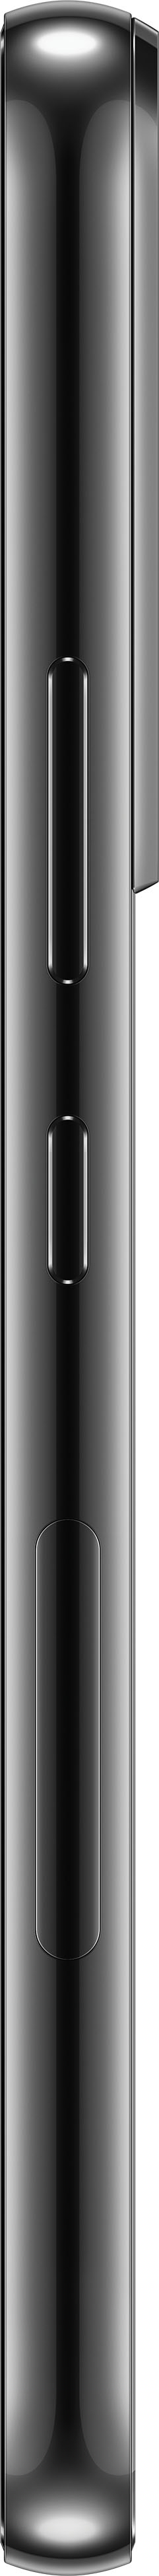 SM-S901UZKAXAA  Galaxy S22 128GB (Unlocked) Phantom Black